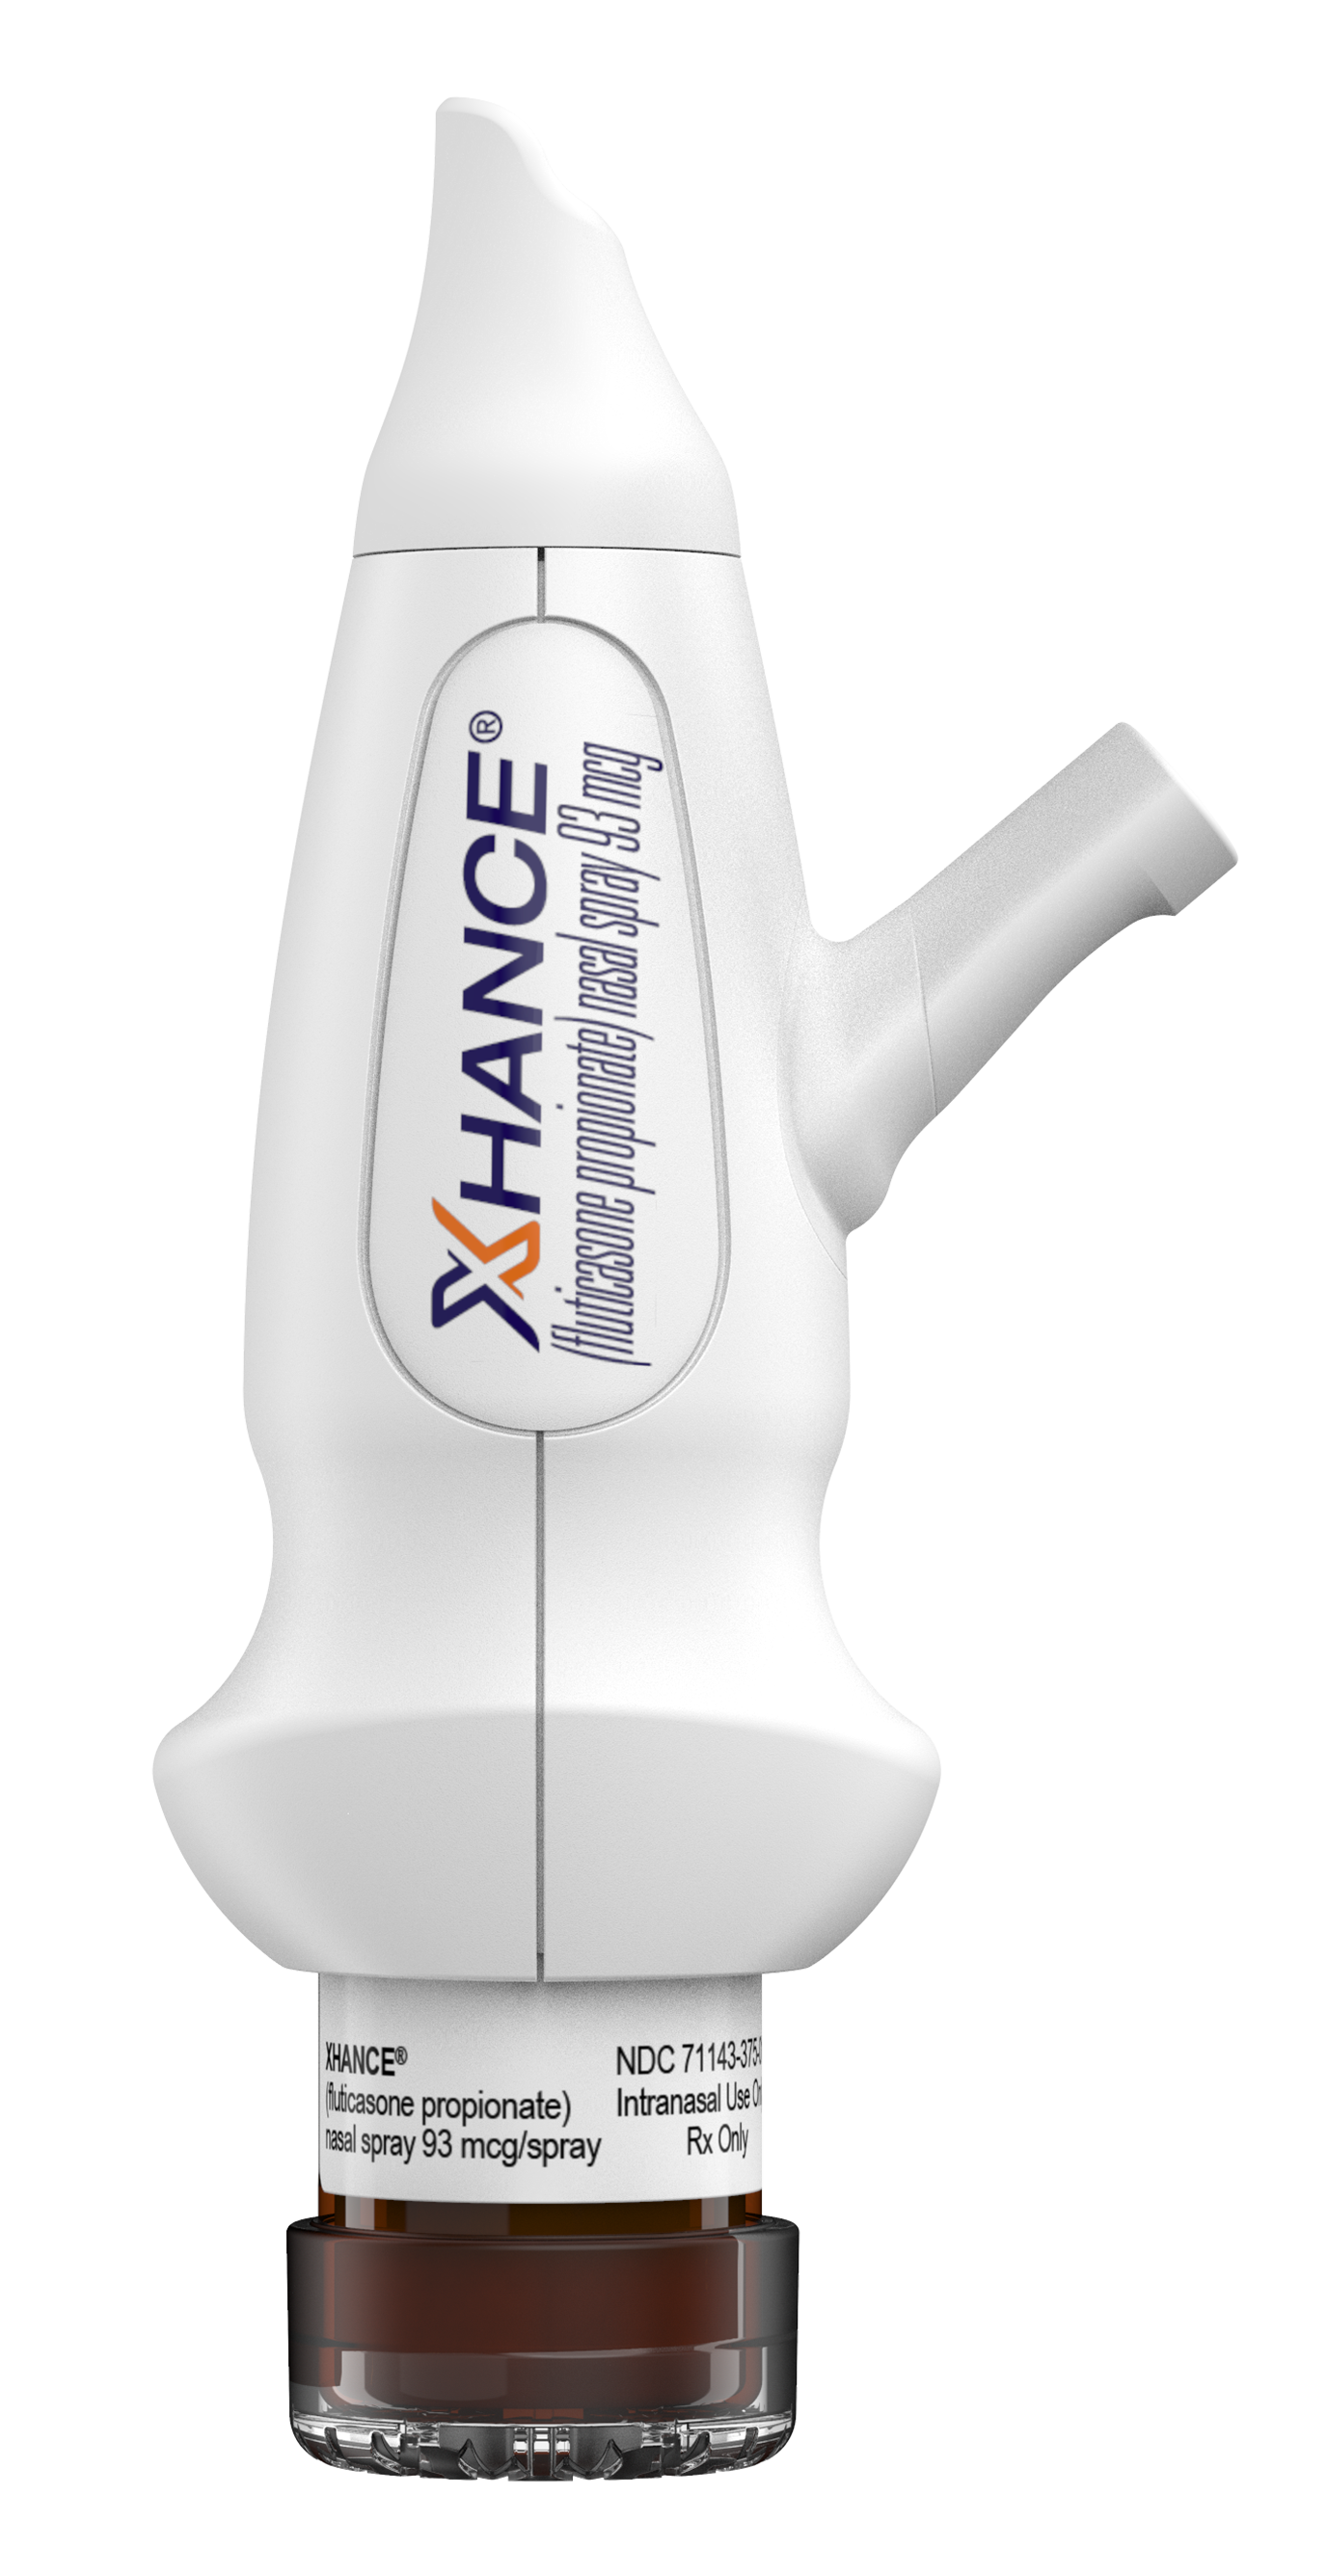 Image of XHANCE device